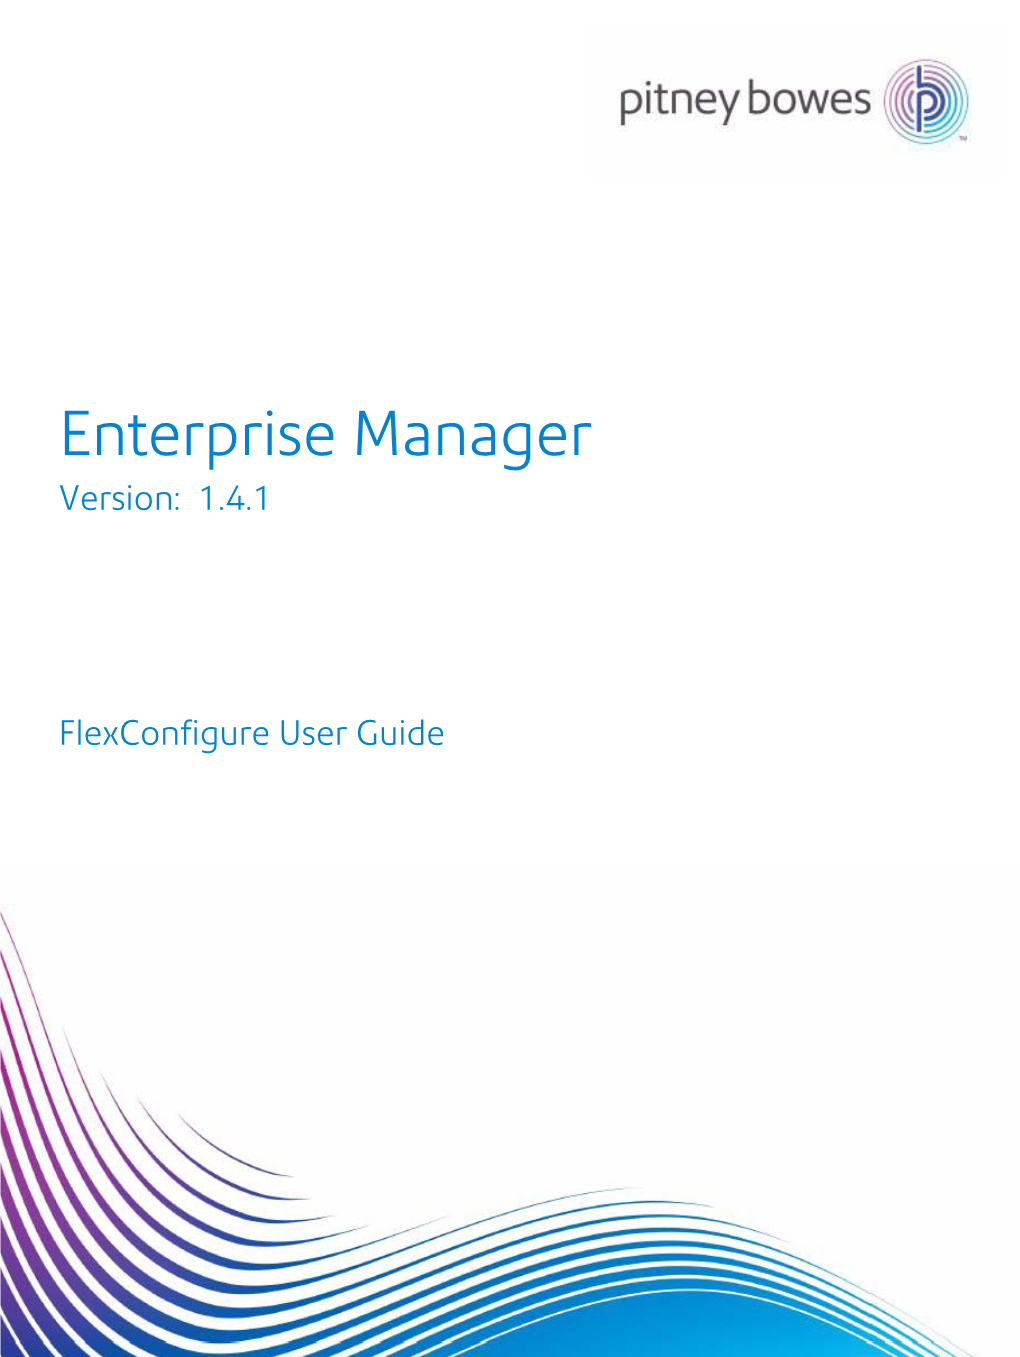 Enterprise Manager FLEXCONFIGURE USER GUIDE